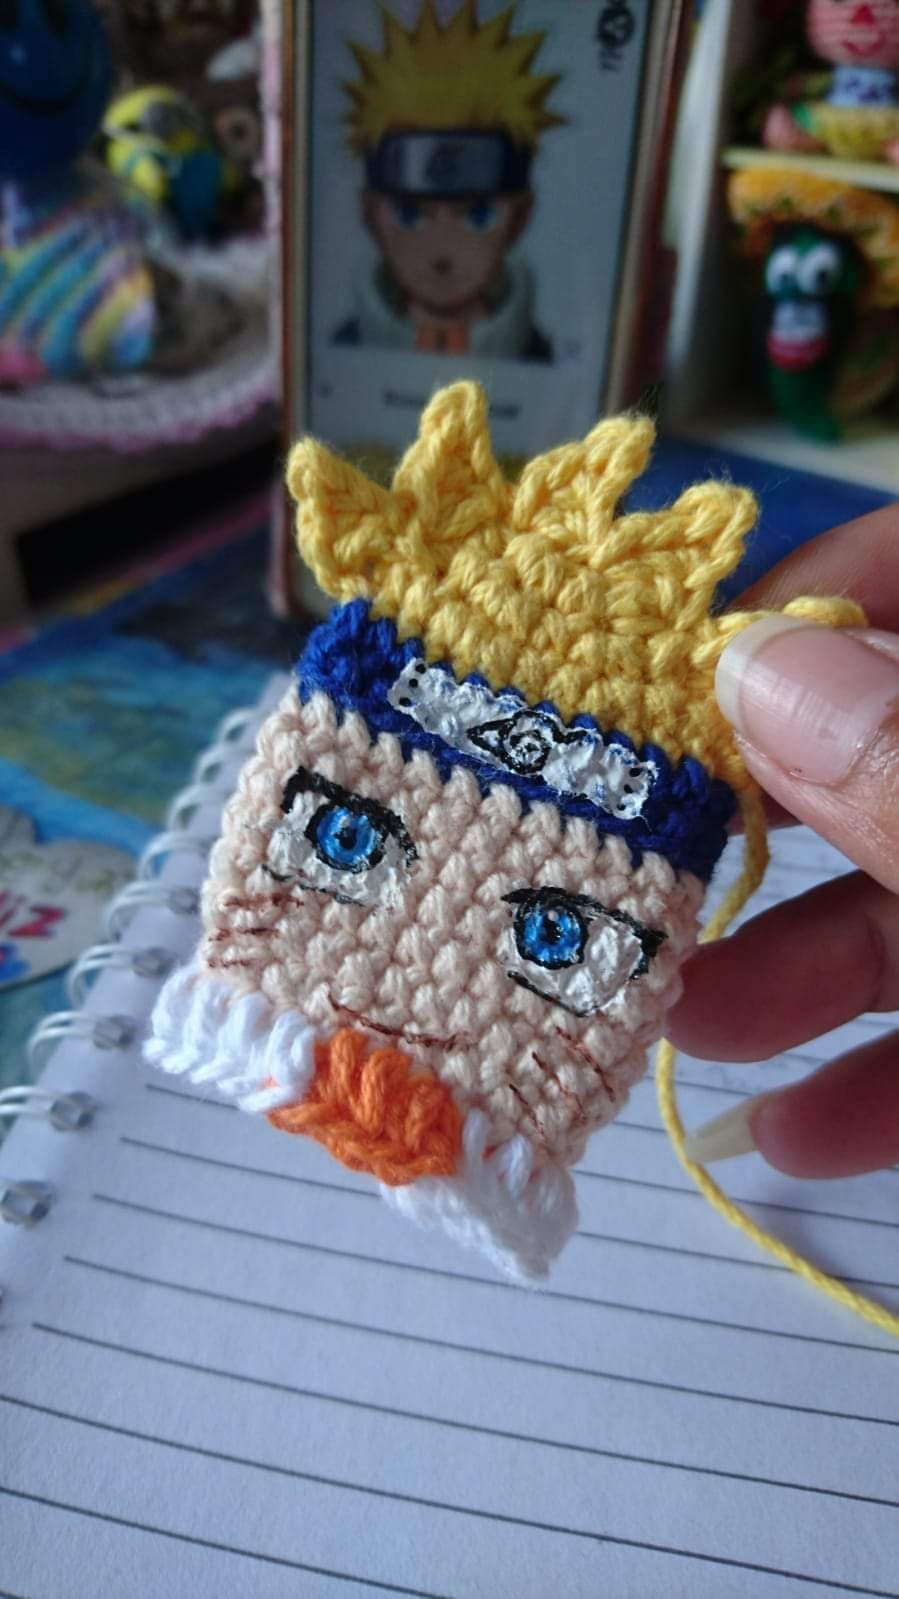 naruto crochet pattern key bag